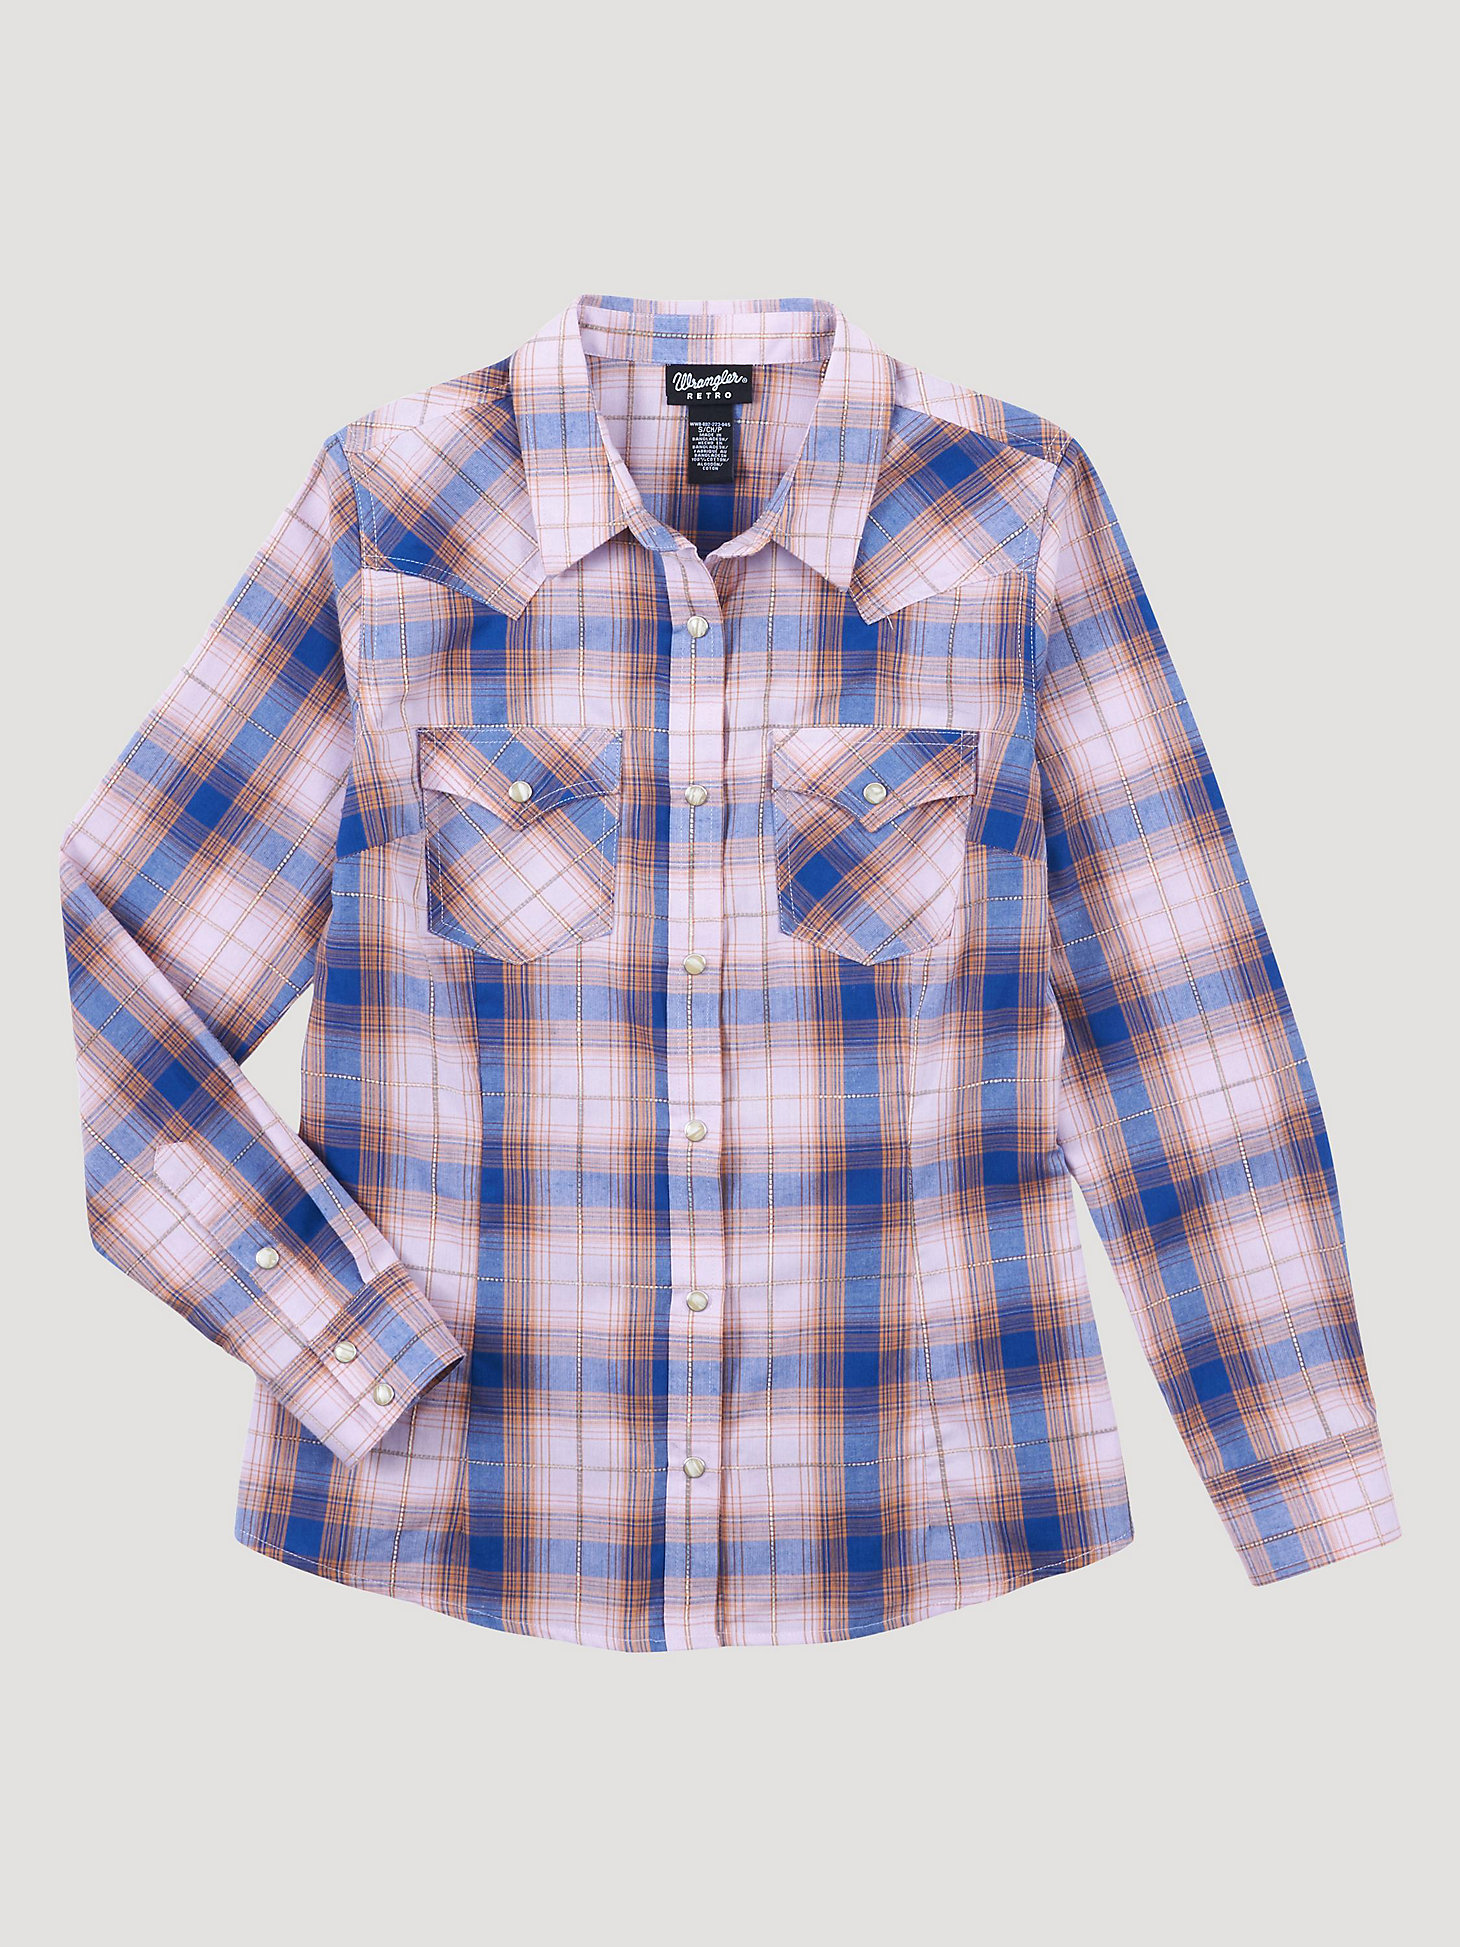 Women's Wrangler Retro® Plaid Western Snap Shirt in purple alternative view 3